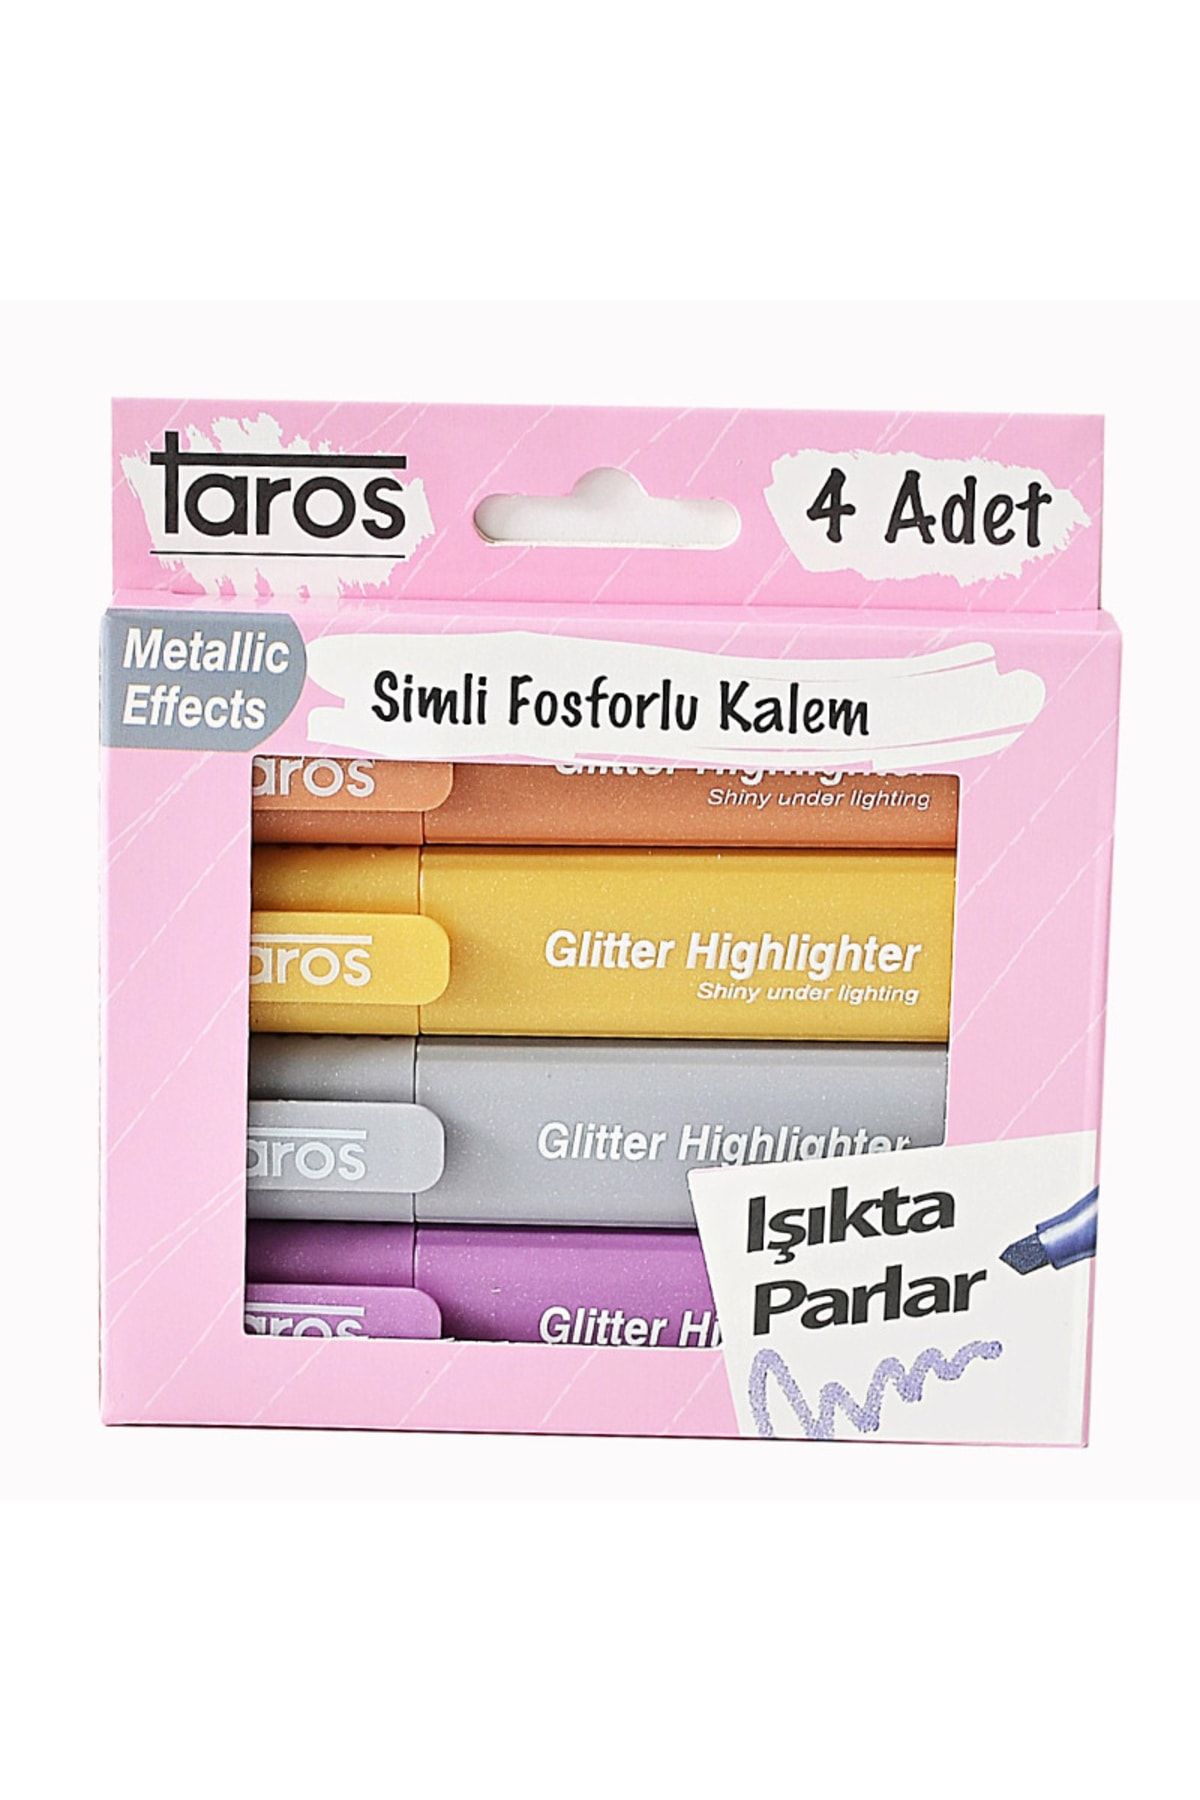 Miniso Taros Glitter Highlighter 4'lü Fosforlu Kalem Seti Simli